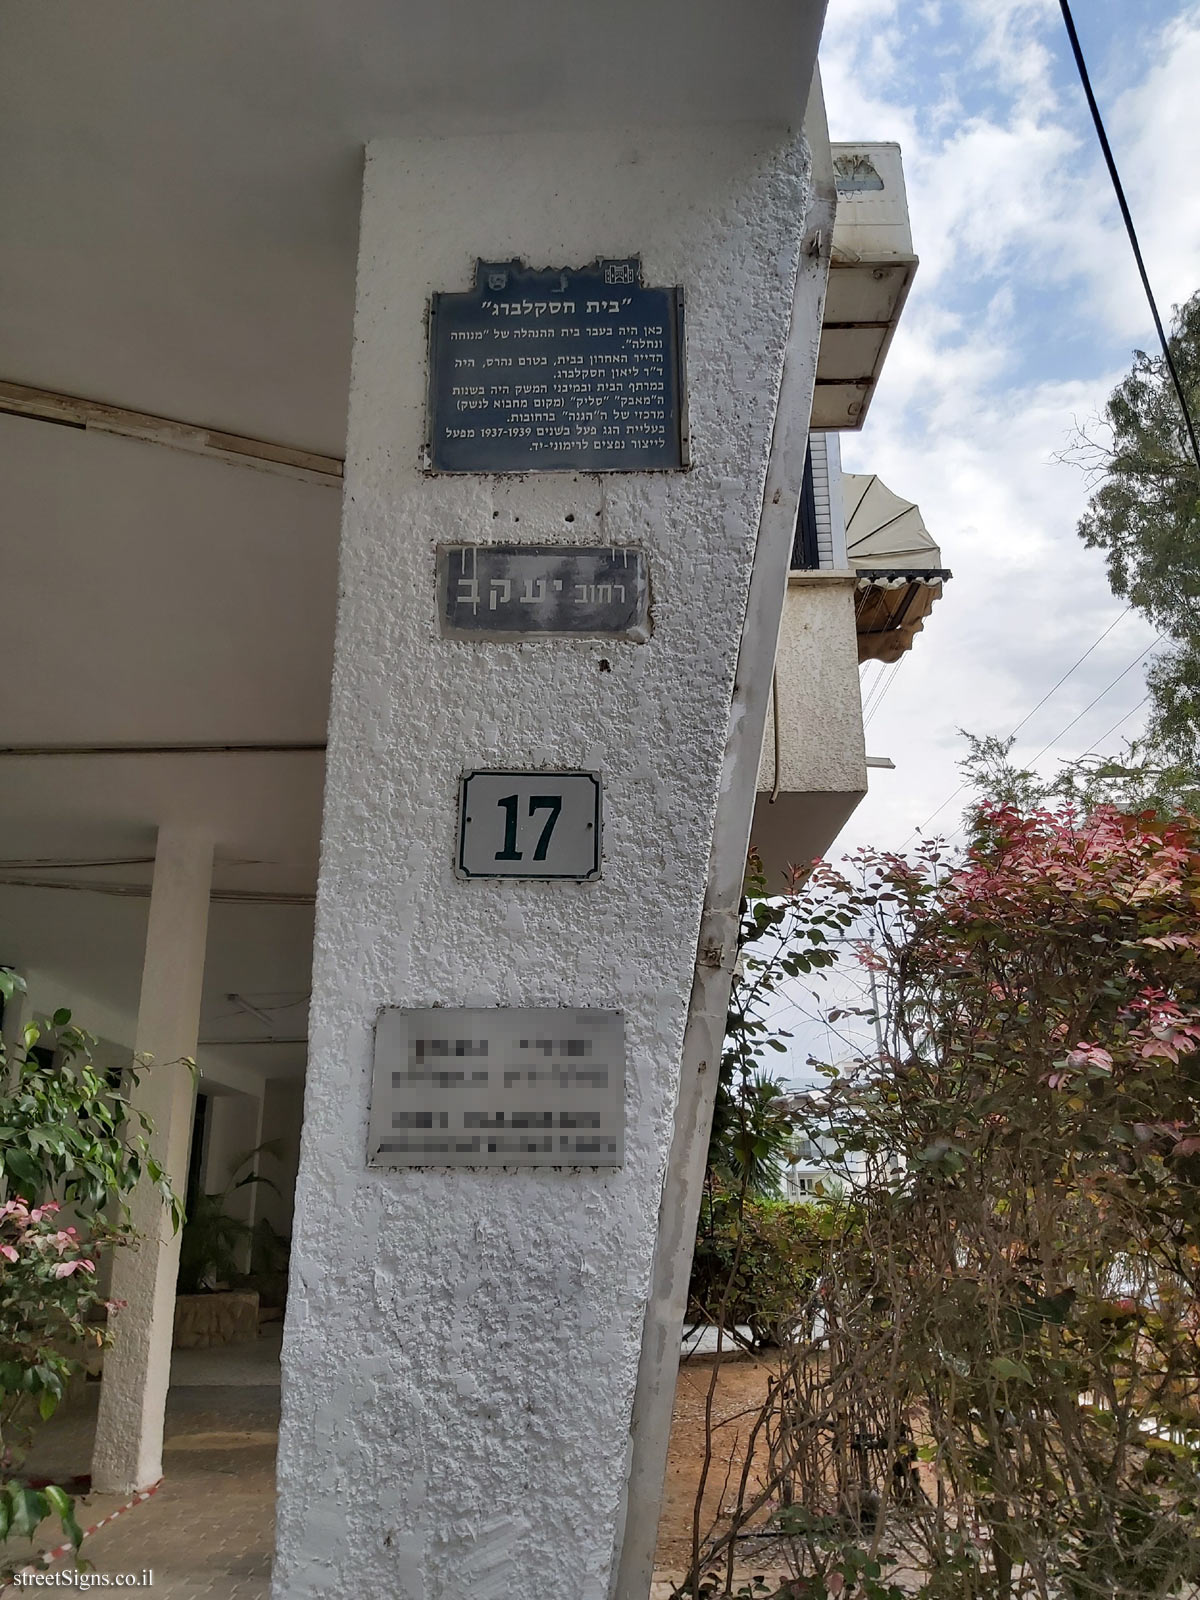 Heritage Sites in Israel - Haskelberg House - Ya’akov St 17, Rehovot, Israel